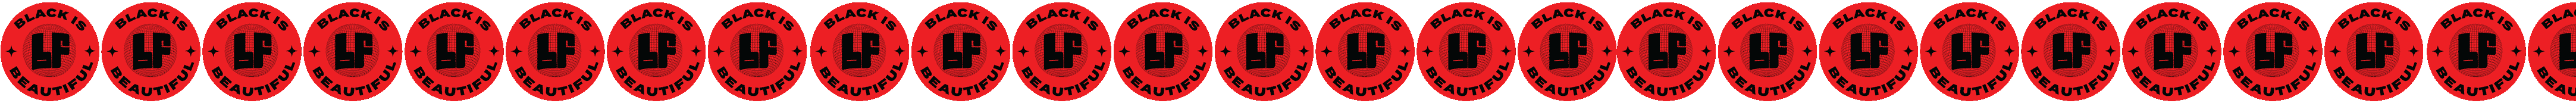 Black Forum - Black Is Beautiful Ticker